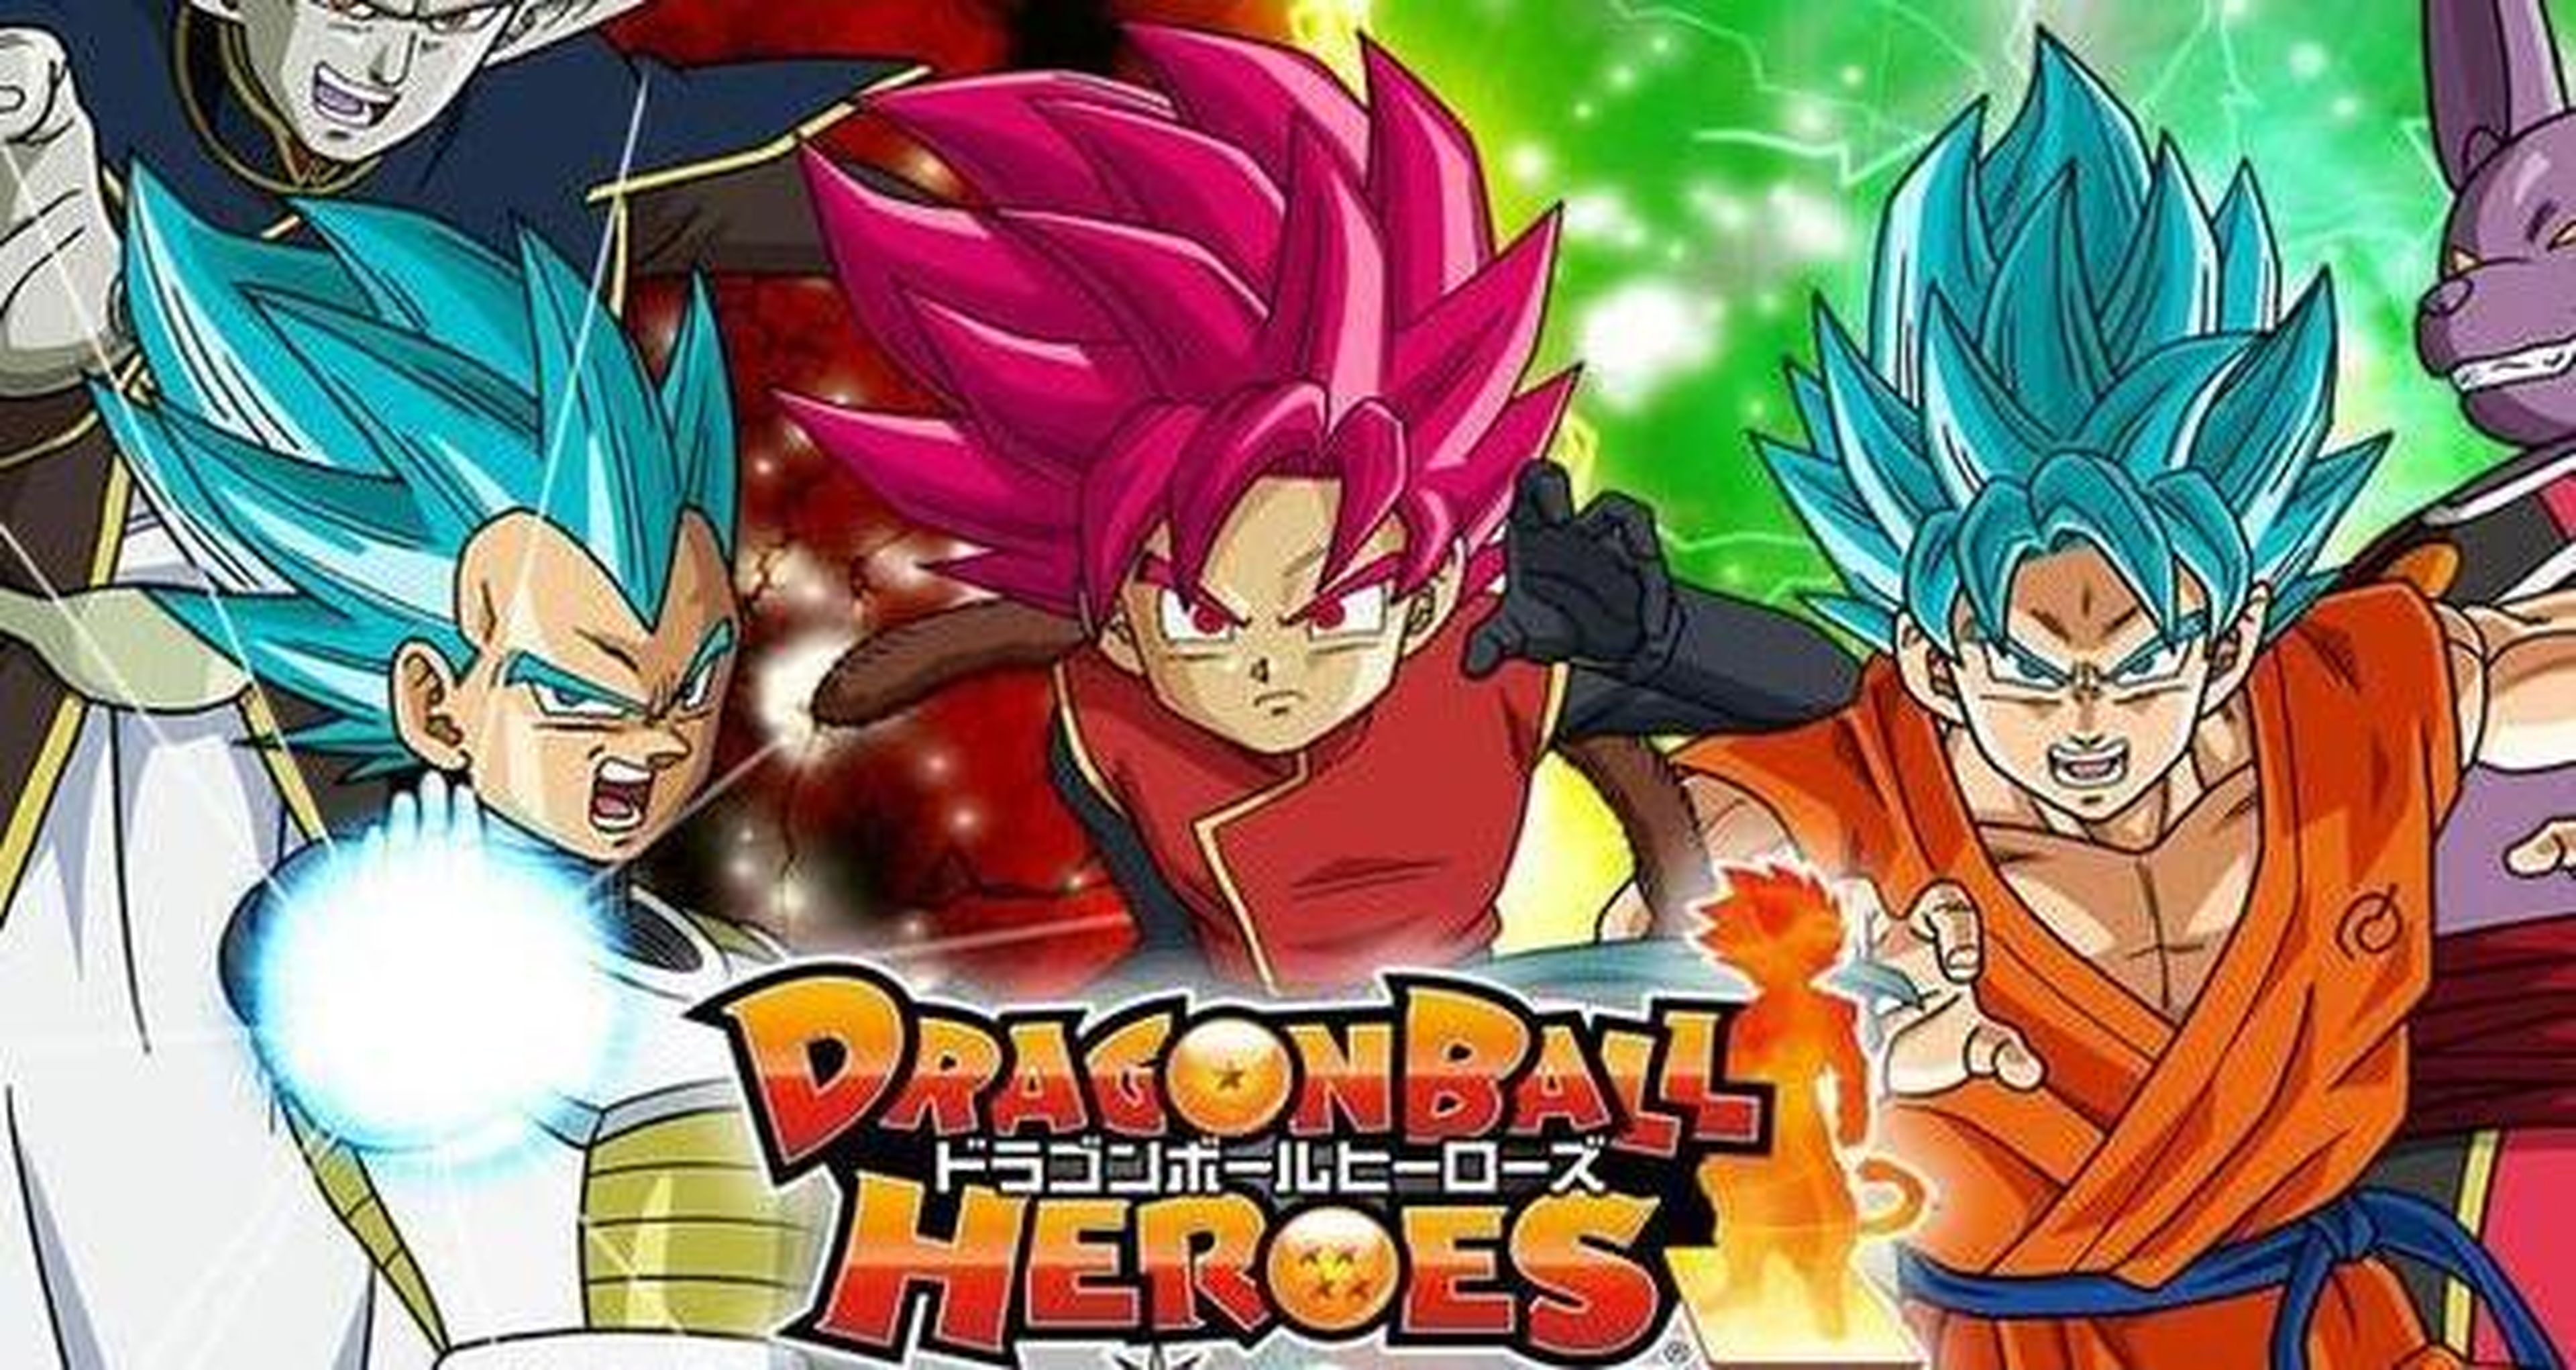 Dragon Ball Heroes - Nuevo Super Saiyan God, Champa y Demigra joven